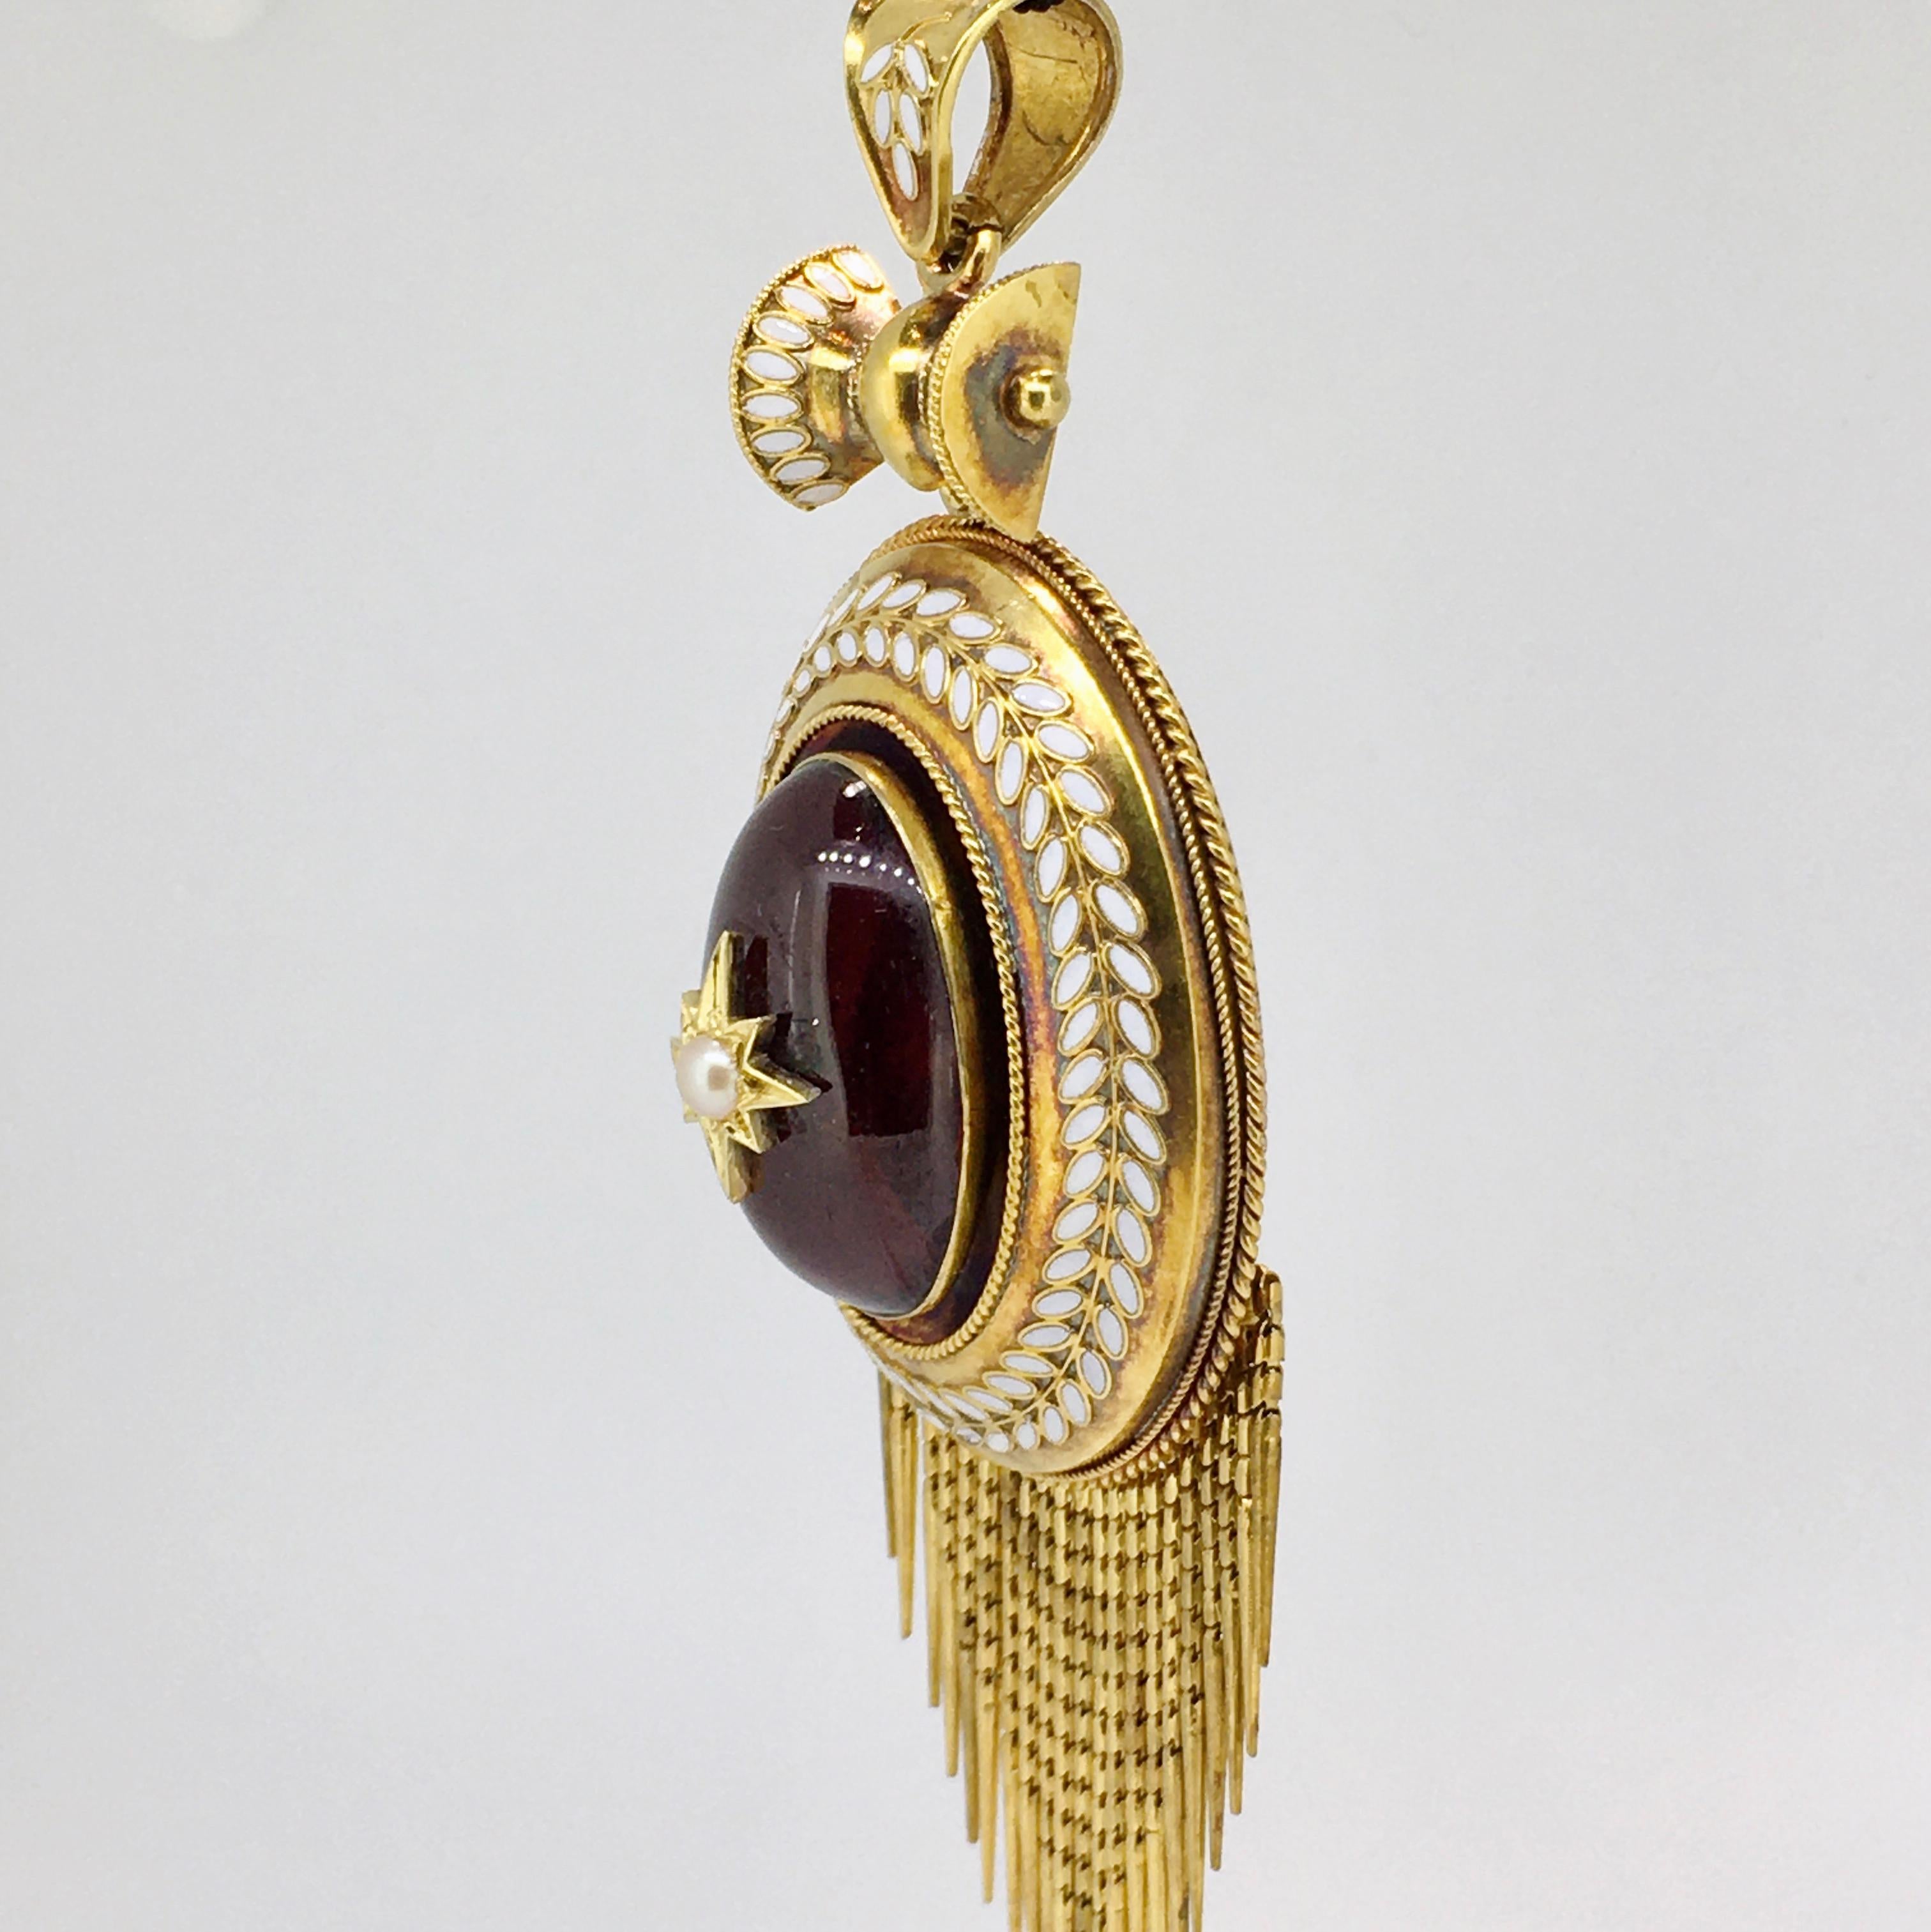 Oval Cut Pendant, Gold, Victorian, Garnet Cabochon, Enamel Decoration, Pearl, 1860